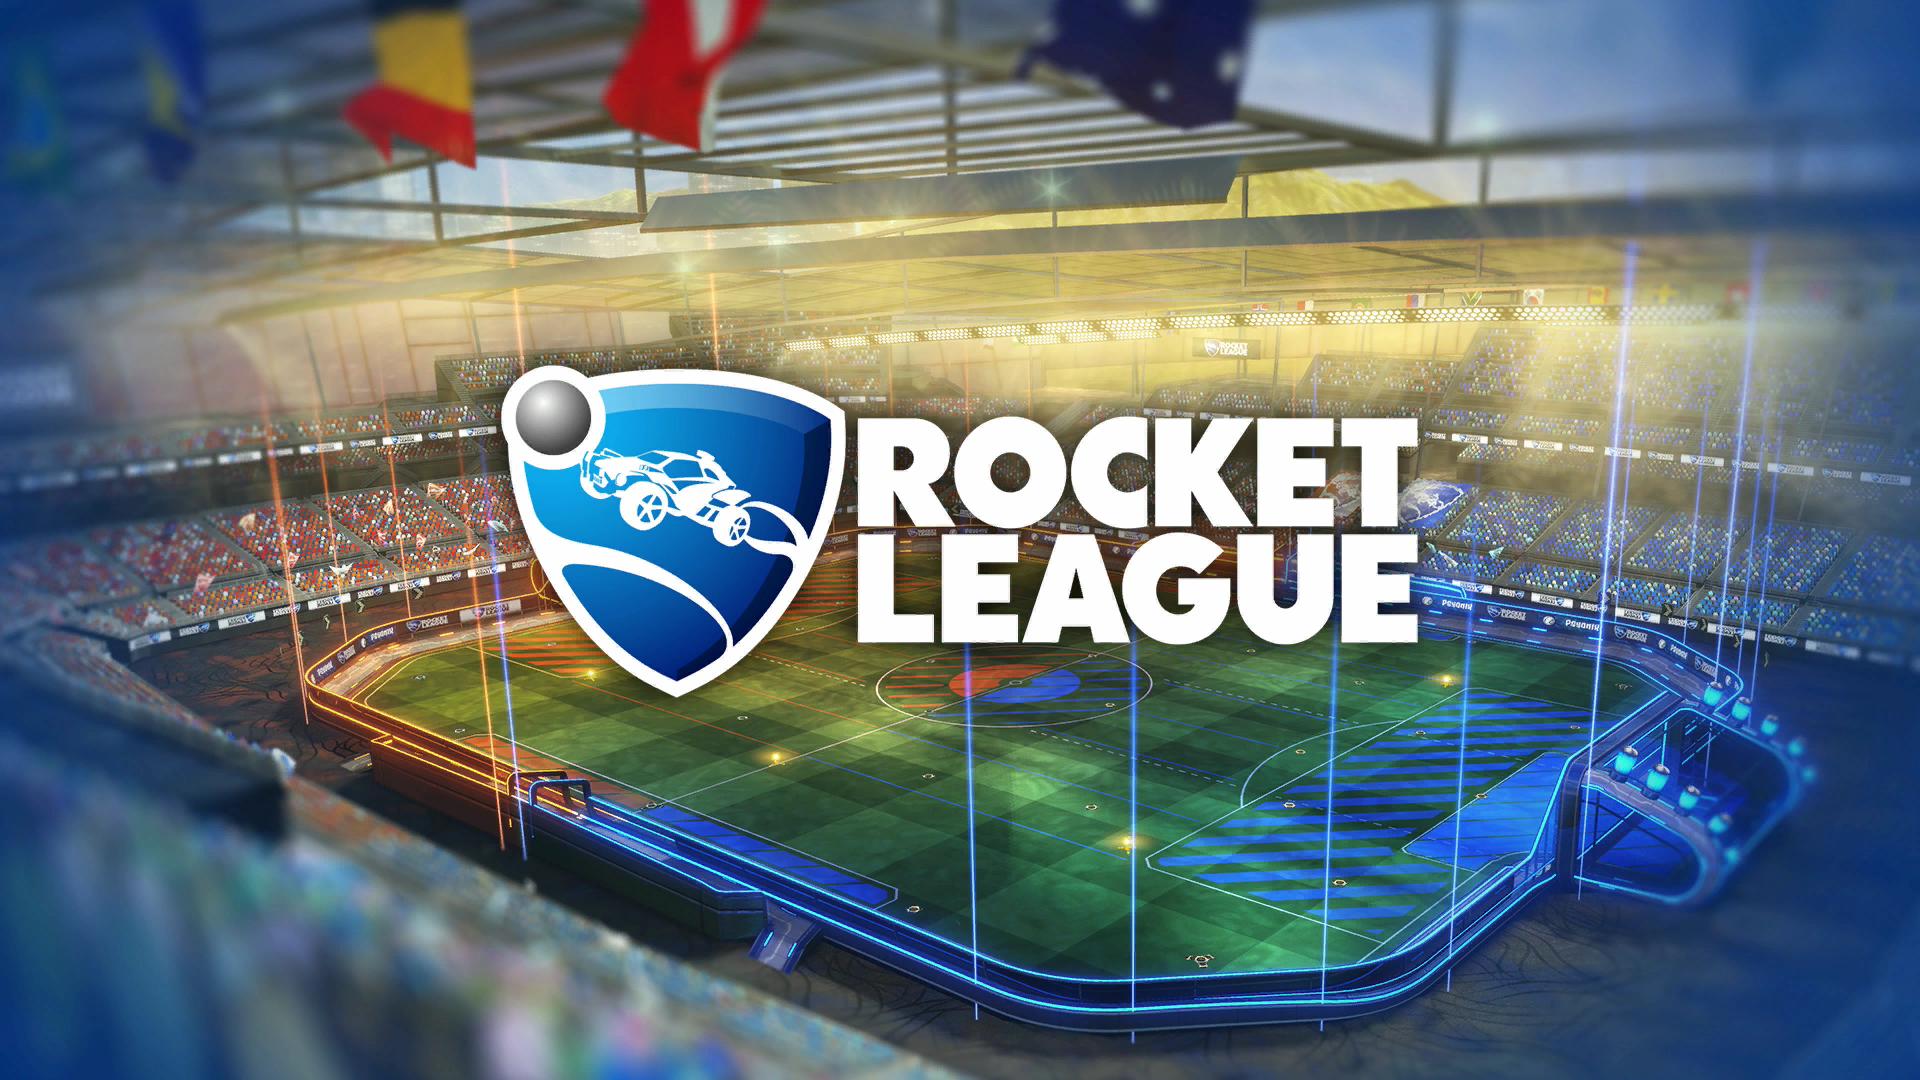 Universal Open Rocket League Staffel 2 – Baldige Live-Übertragung